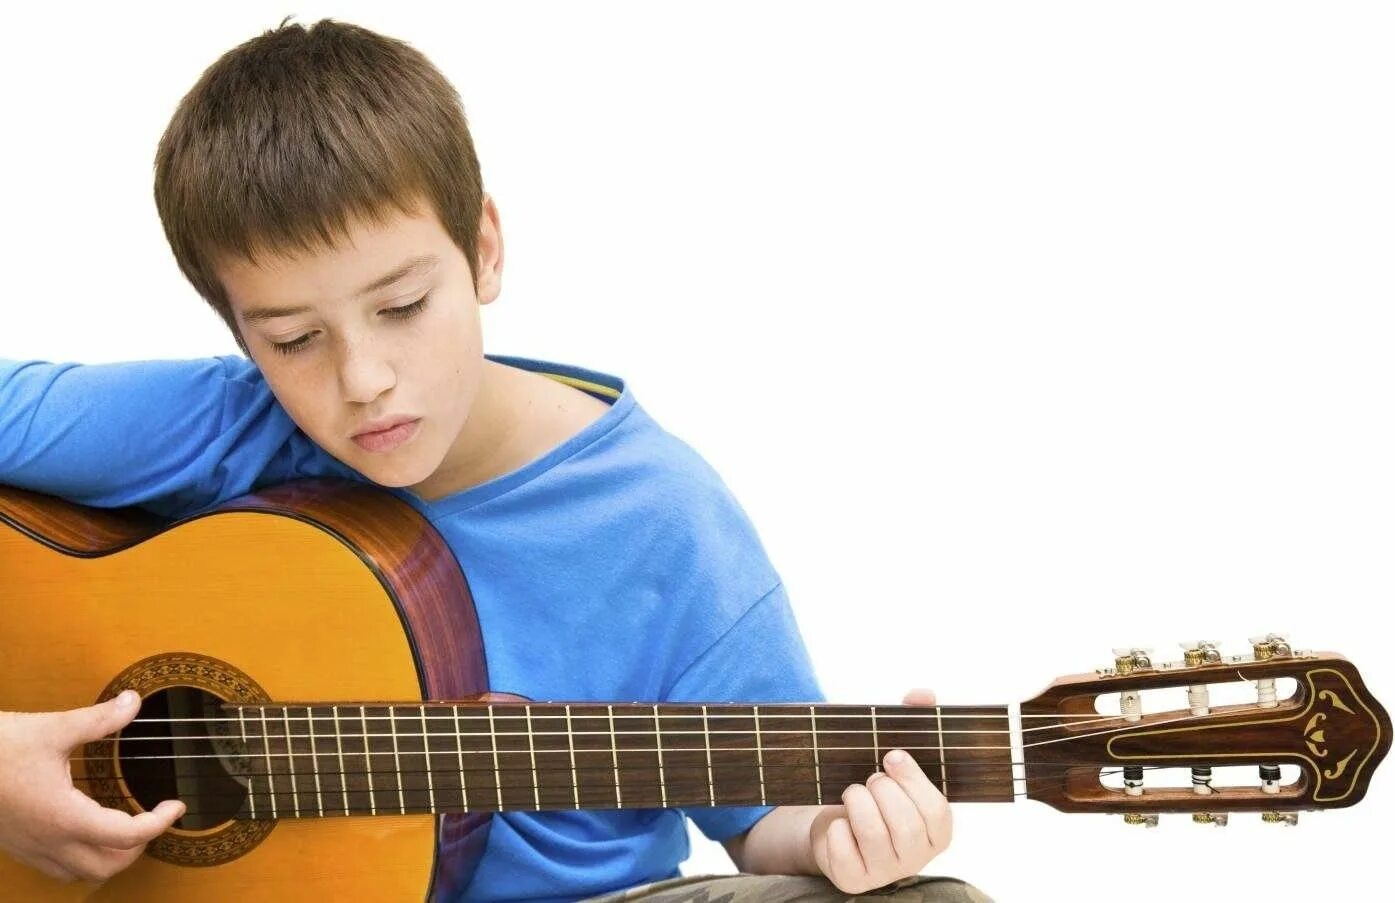 Ребенок играющий на гитаре. Гитара для детей. Подросток с гитарой. Подросток музыкант. Гитара начало обучения